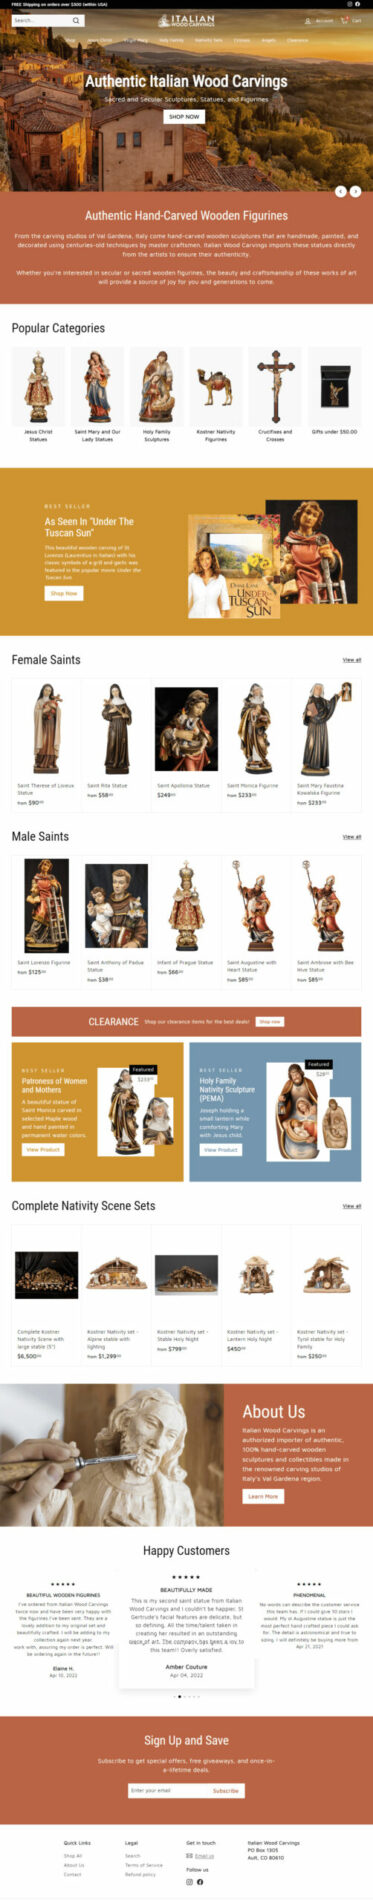 italian woodcarvings website layout